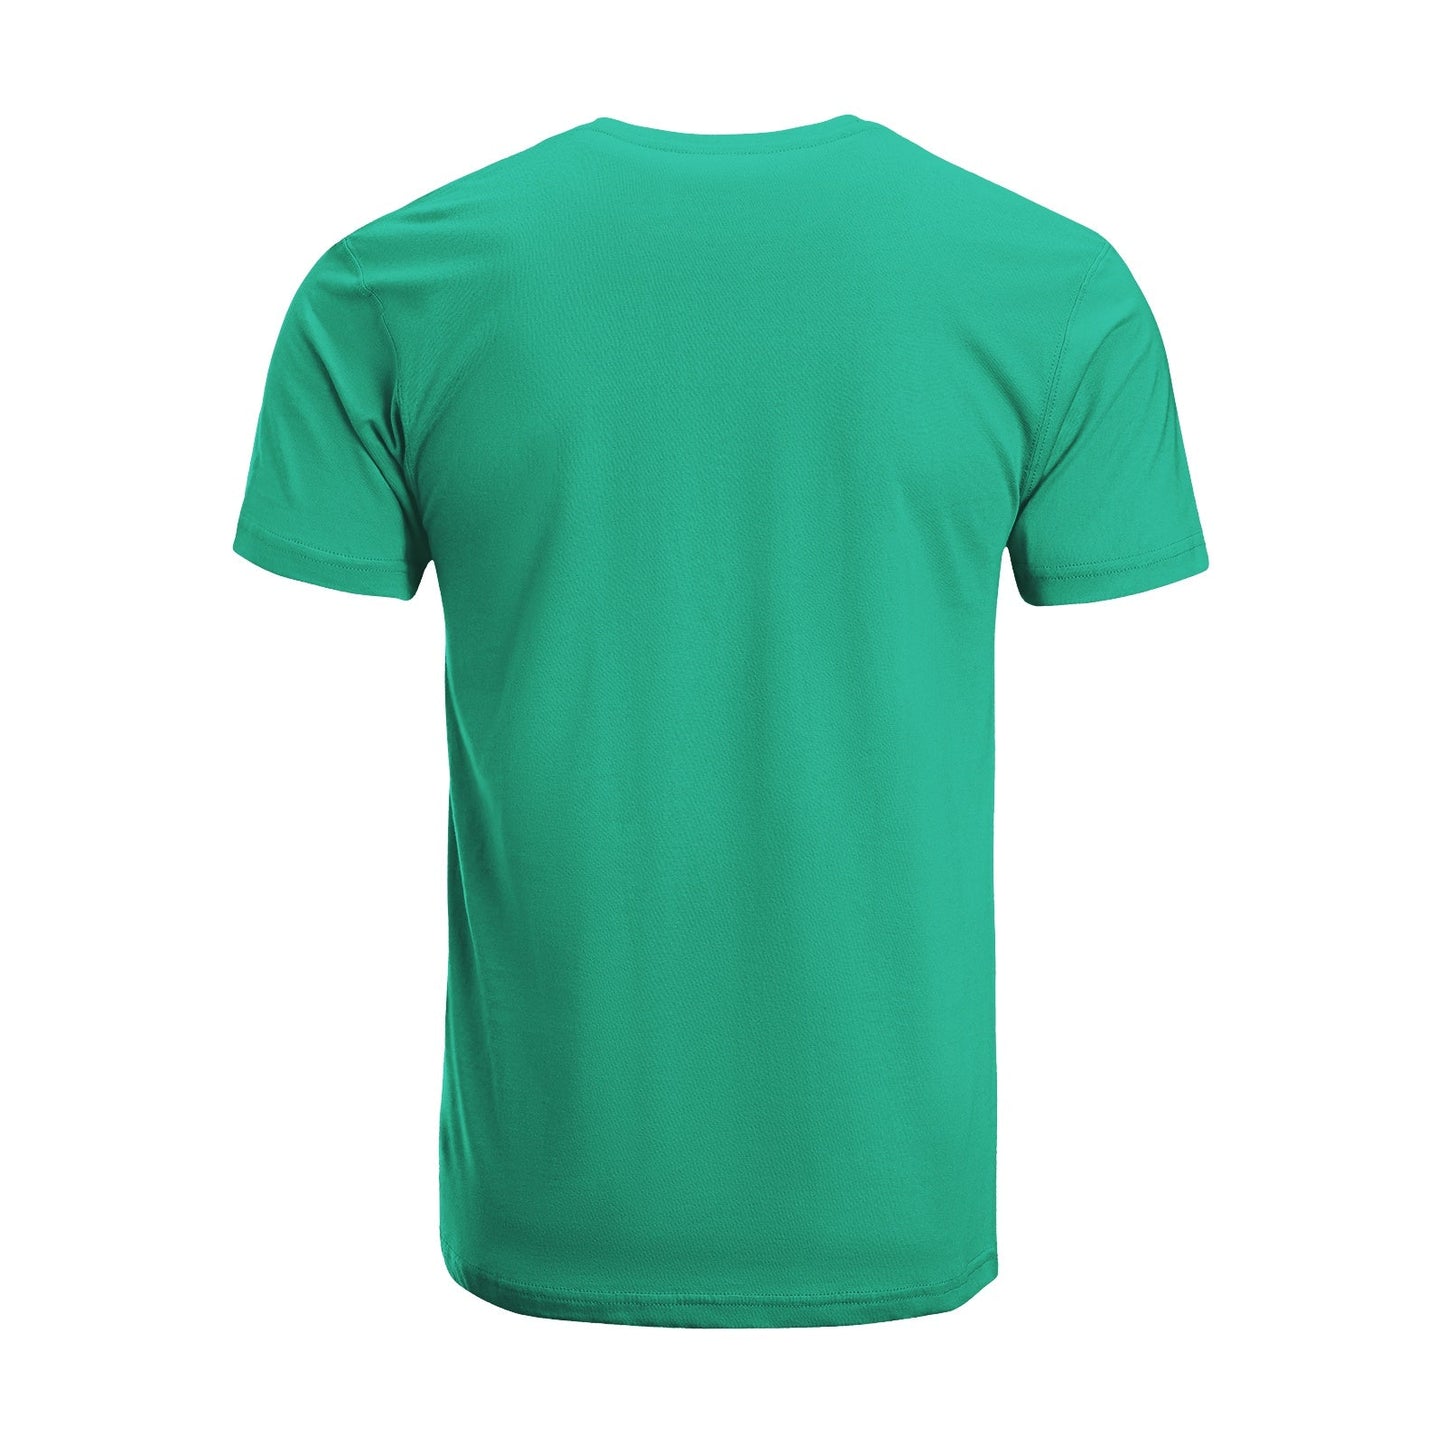 Unisex Short Sleeve Crew Neck Cotton Jersey T-Shirt CAT 43 - Tara-Outfits.com